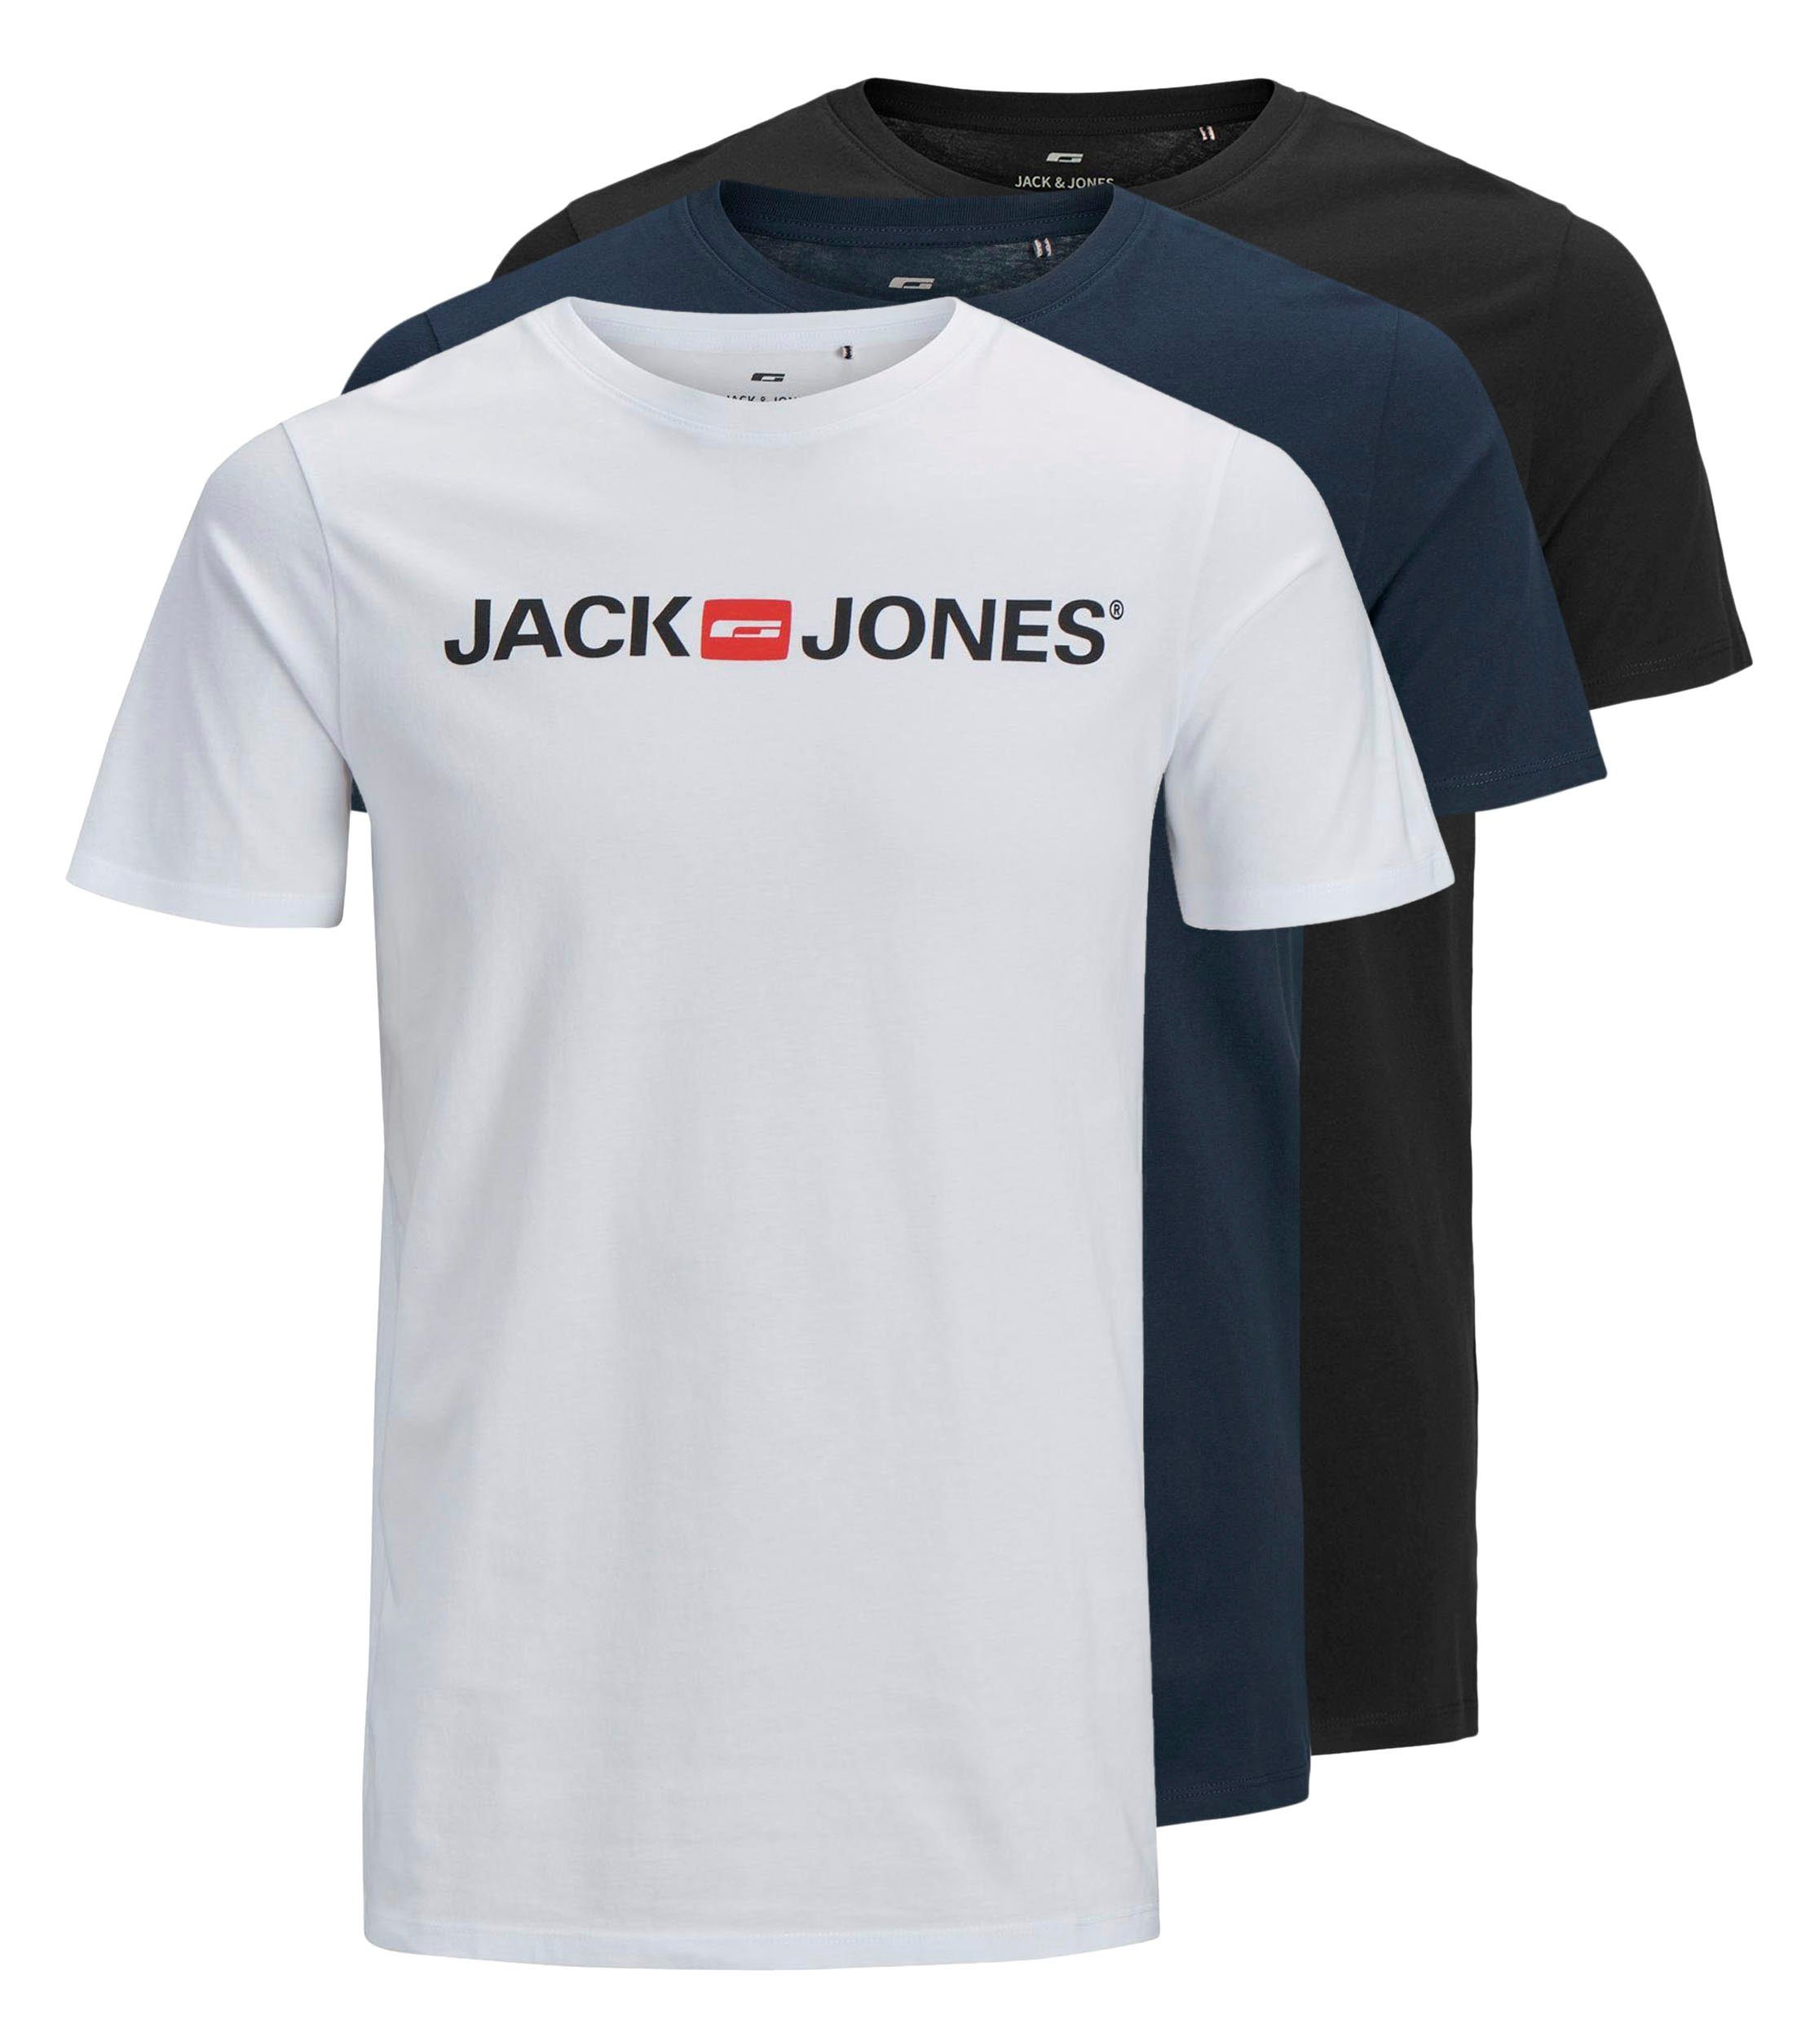 Jack & Jones Herren Shirts online kaufen | OTTO